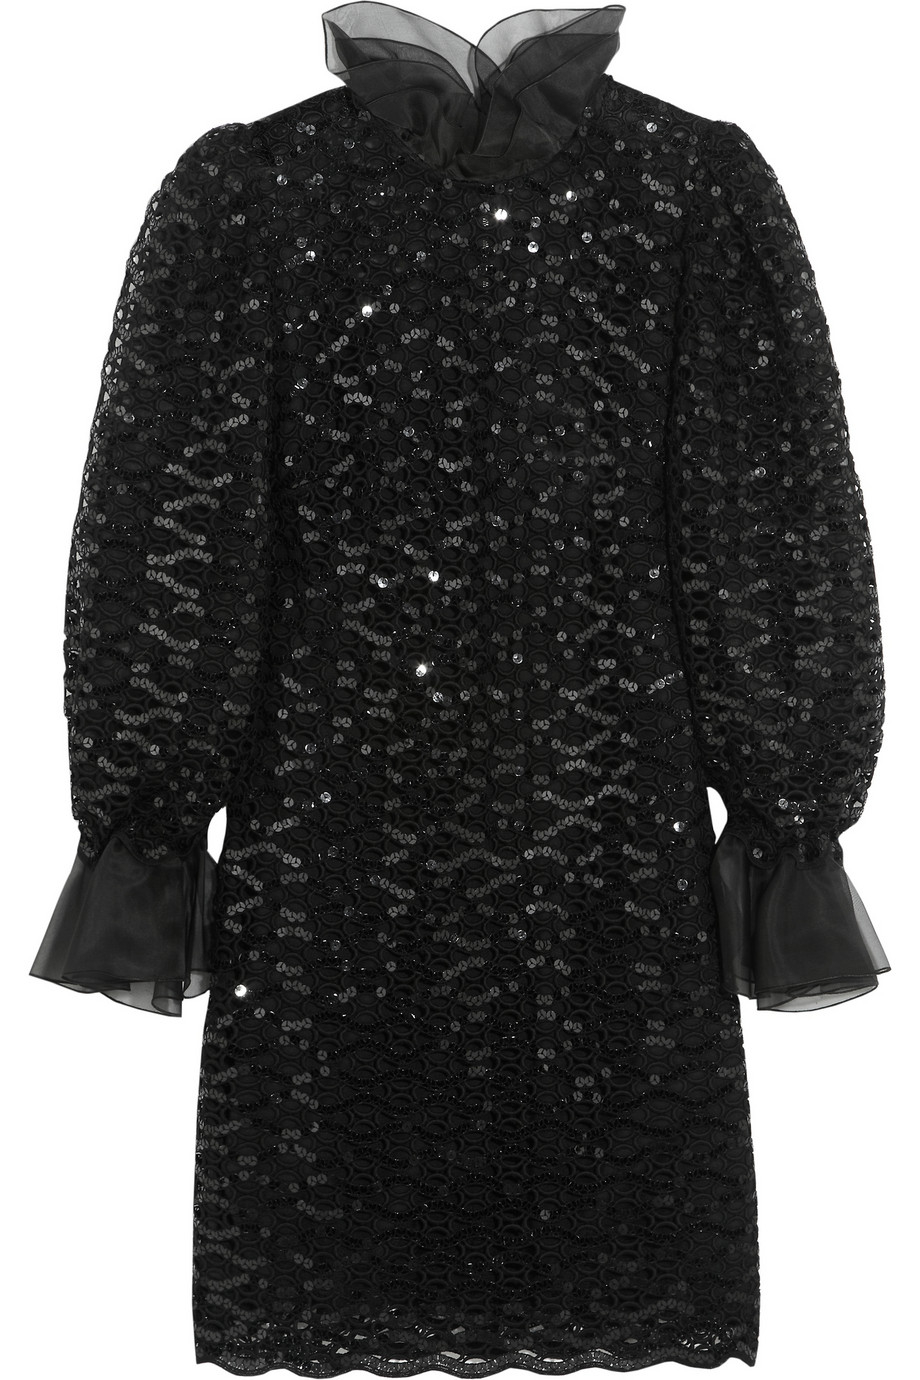 Lyst - Dolce & Gabbana Sequined Macramé Lace Mini Dress in Black